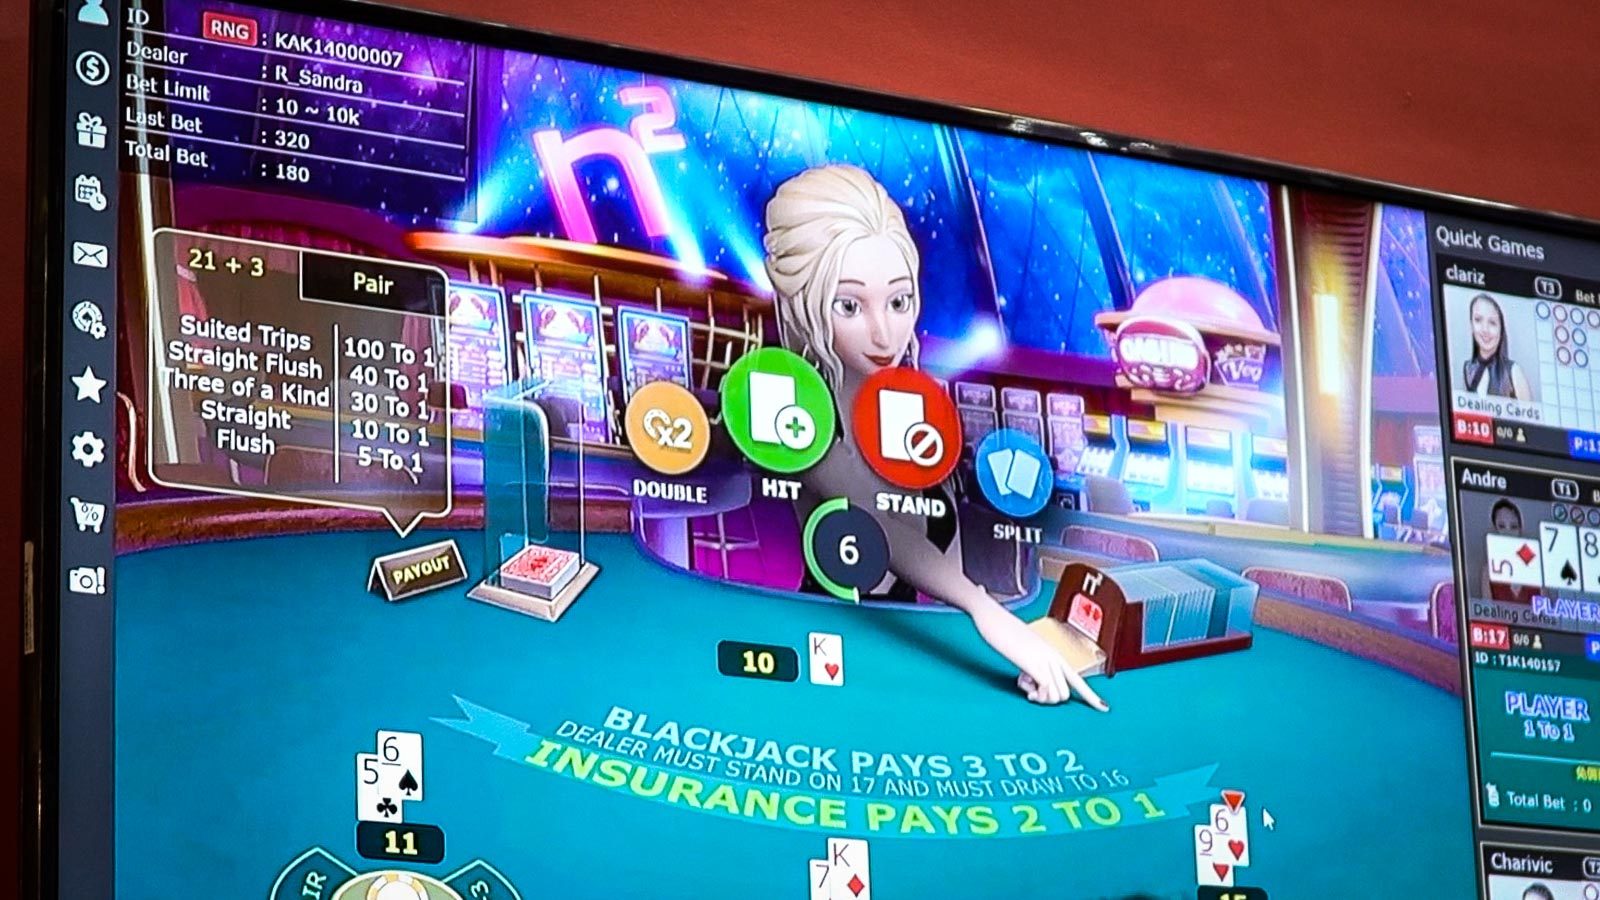 High risk, high return: House to probe online gambling boom